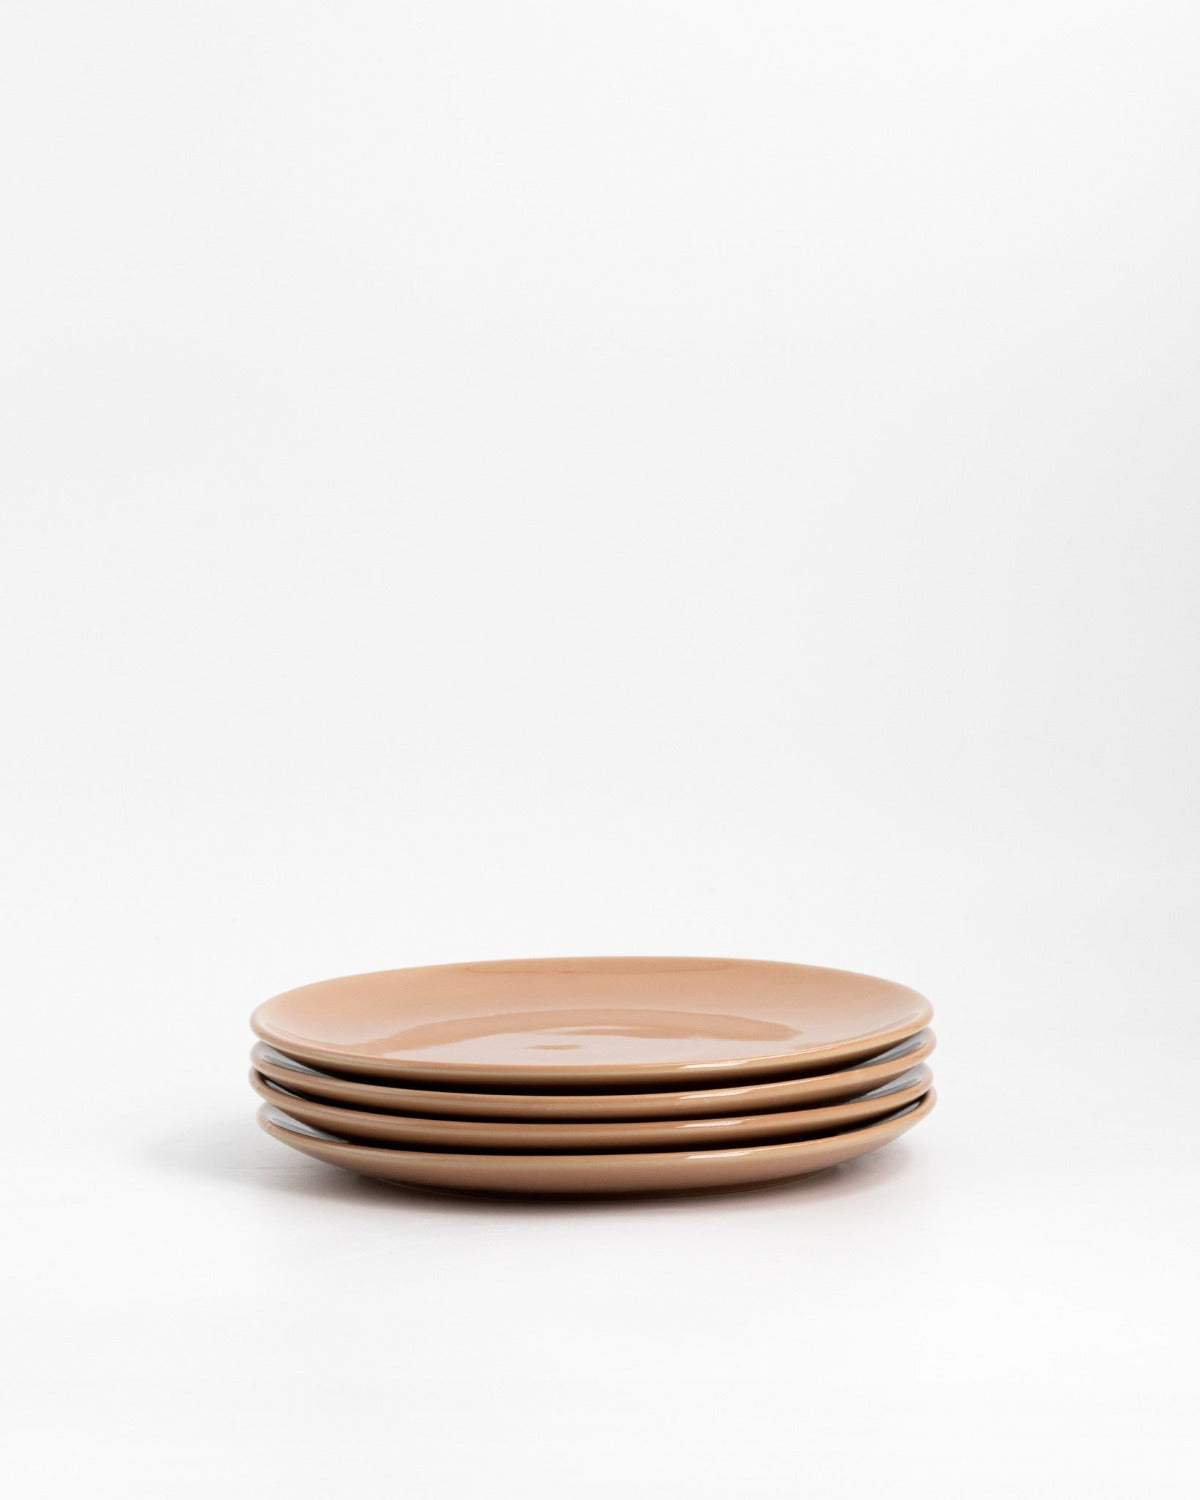 Farrago Plate Wild Nude/21 cm 